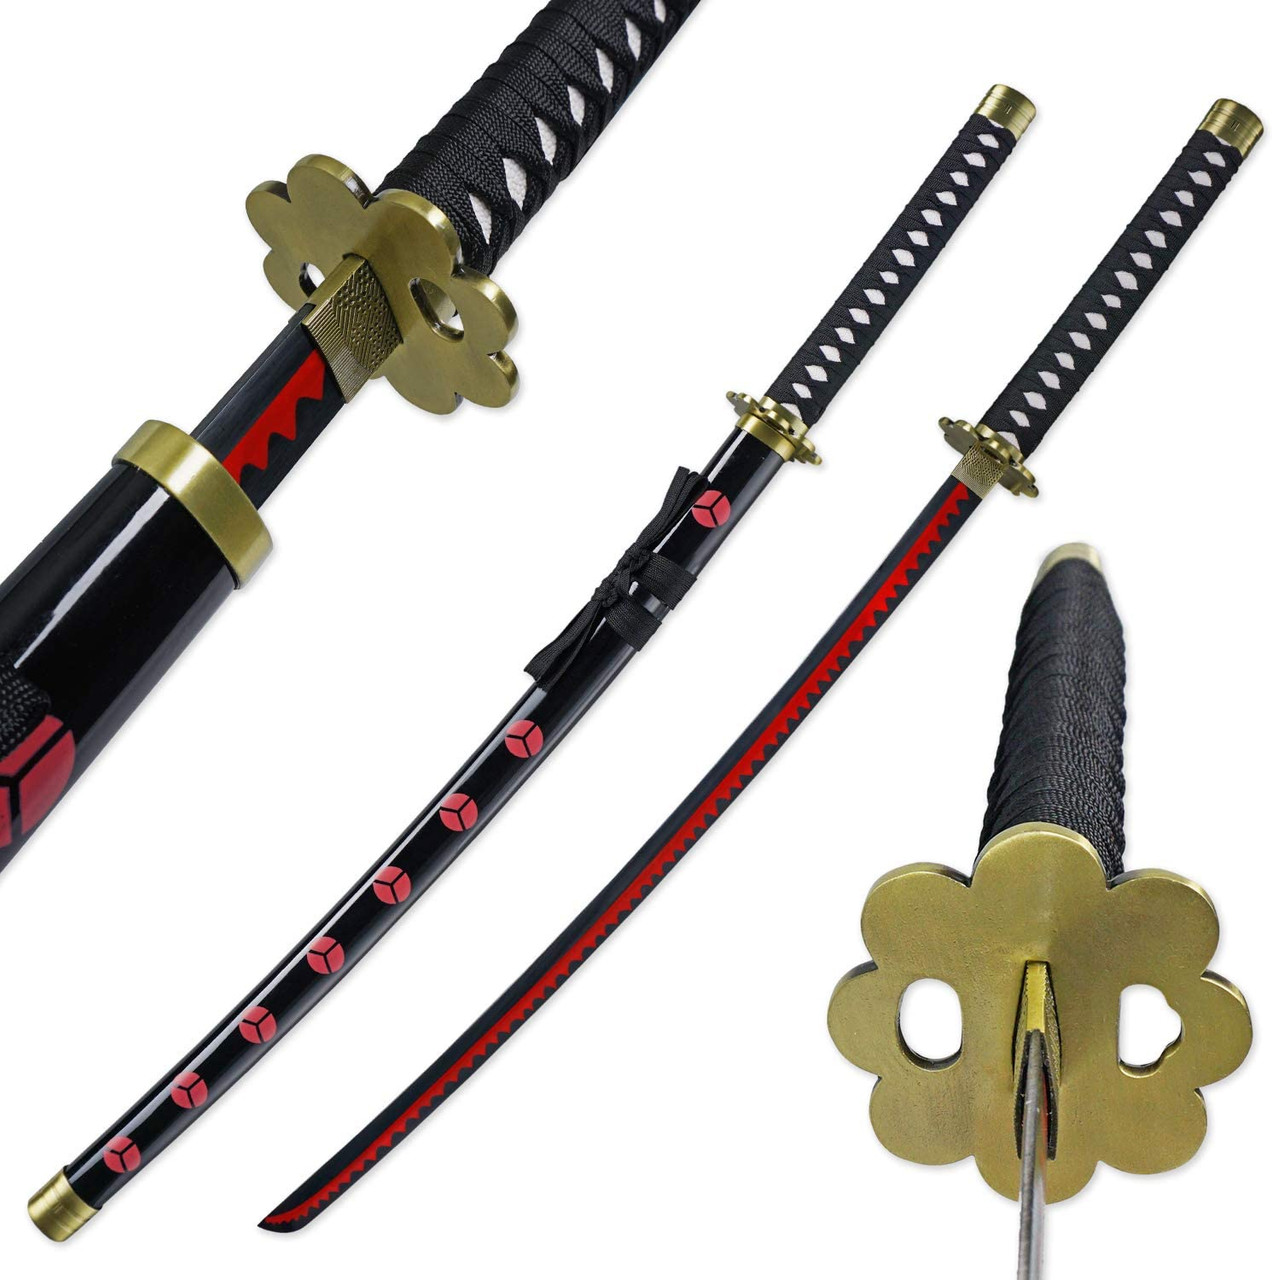  Adust Carbon Steel Zoro Sword, Anime Sword, 41 inch Overall,  Japanese Katana Samurai Sword : Sports & Outdoors